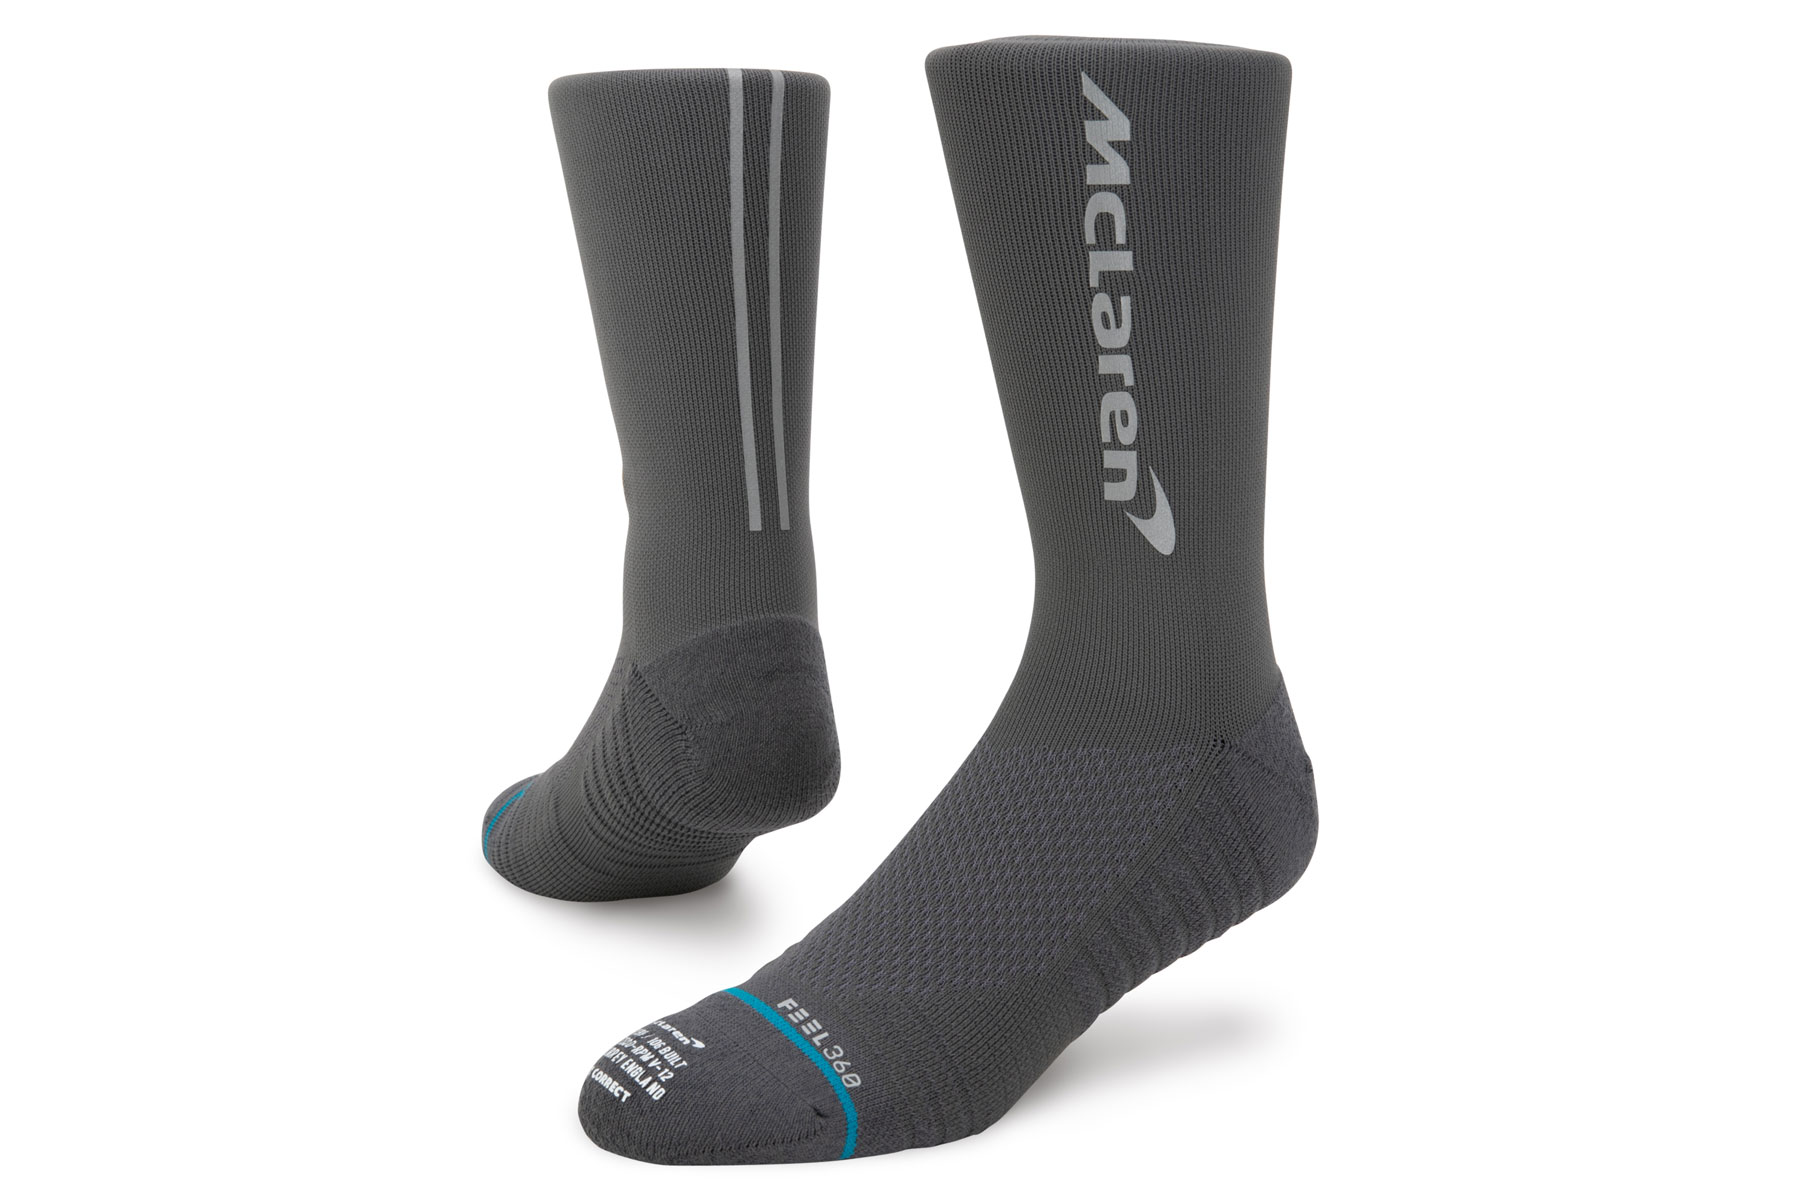 McLaren socks